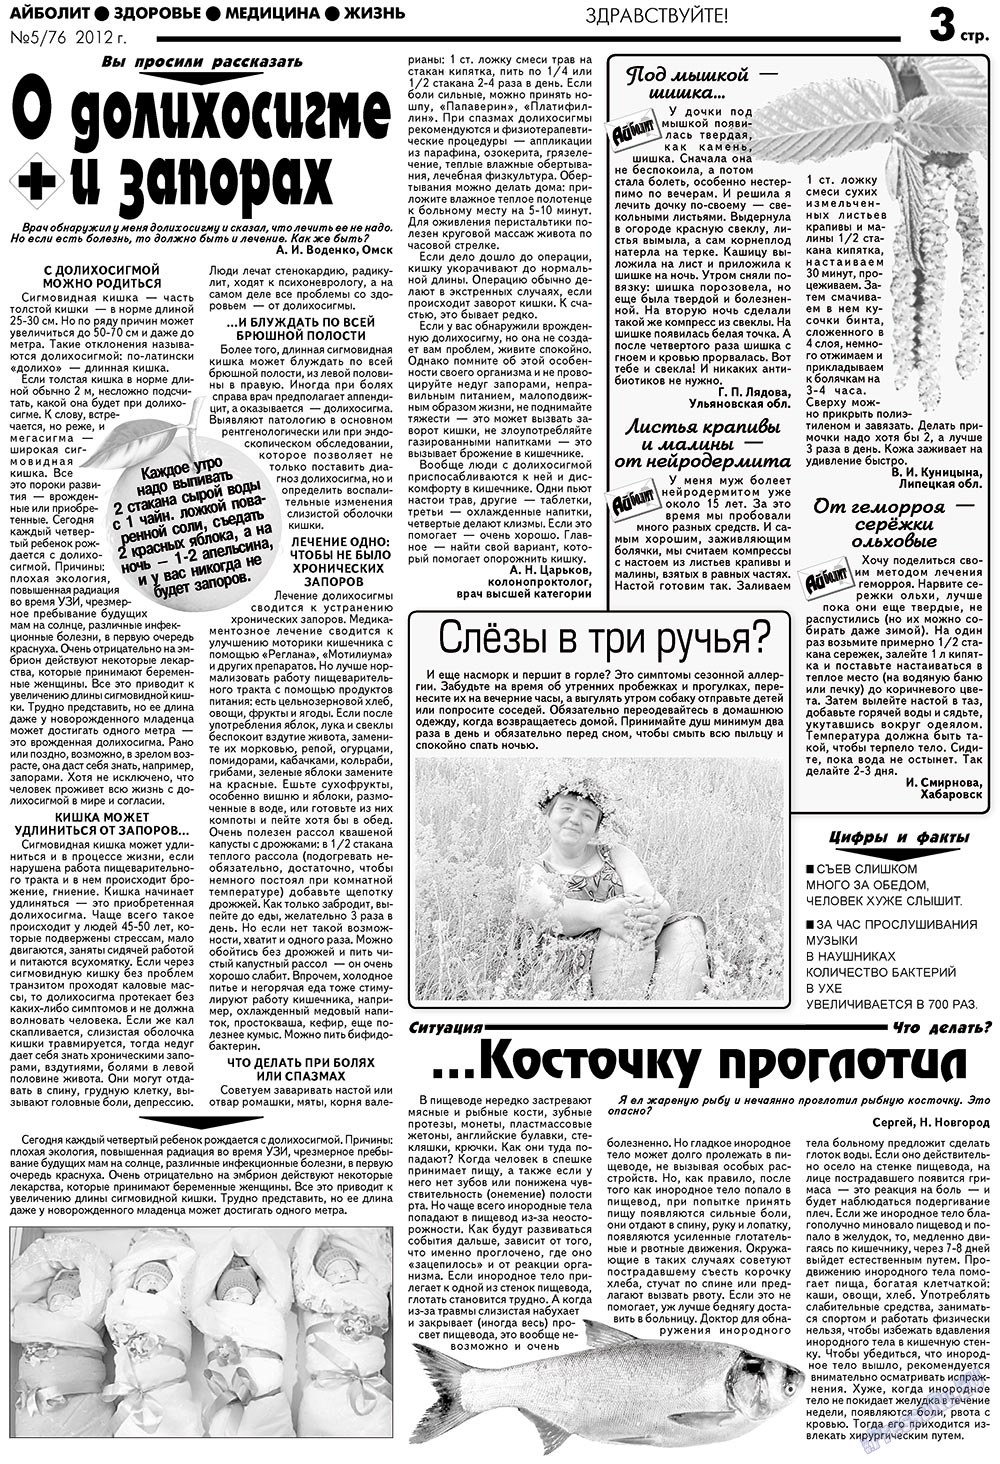 АйБолит (газета). 2012 год, номер 5, стр. 3